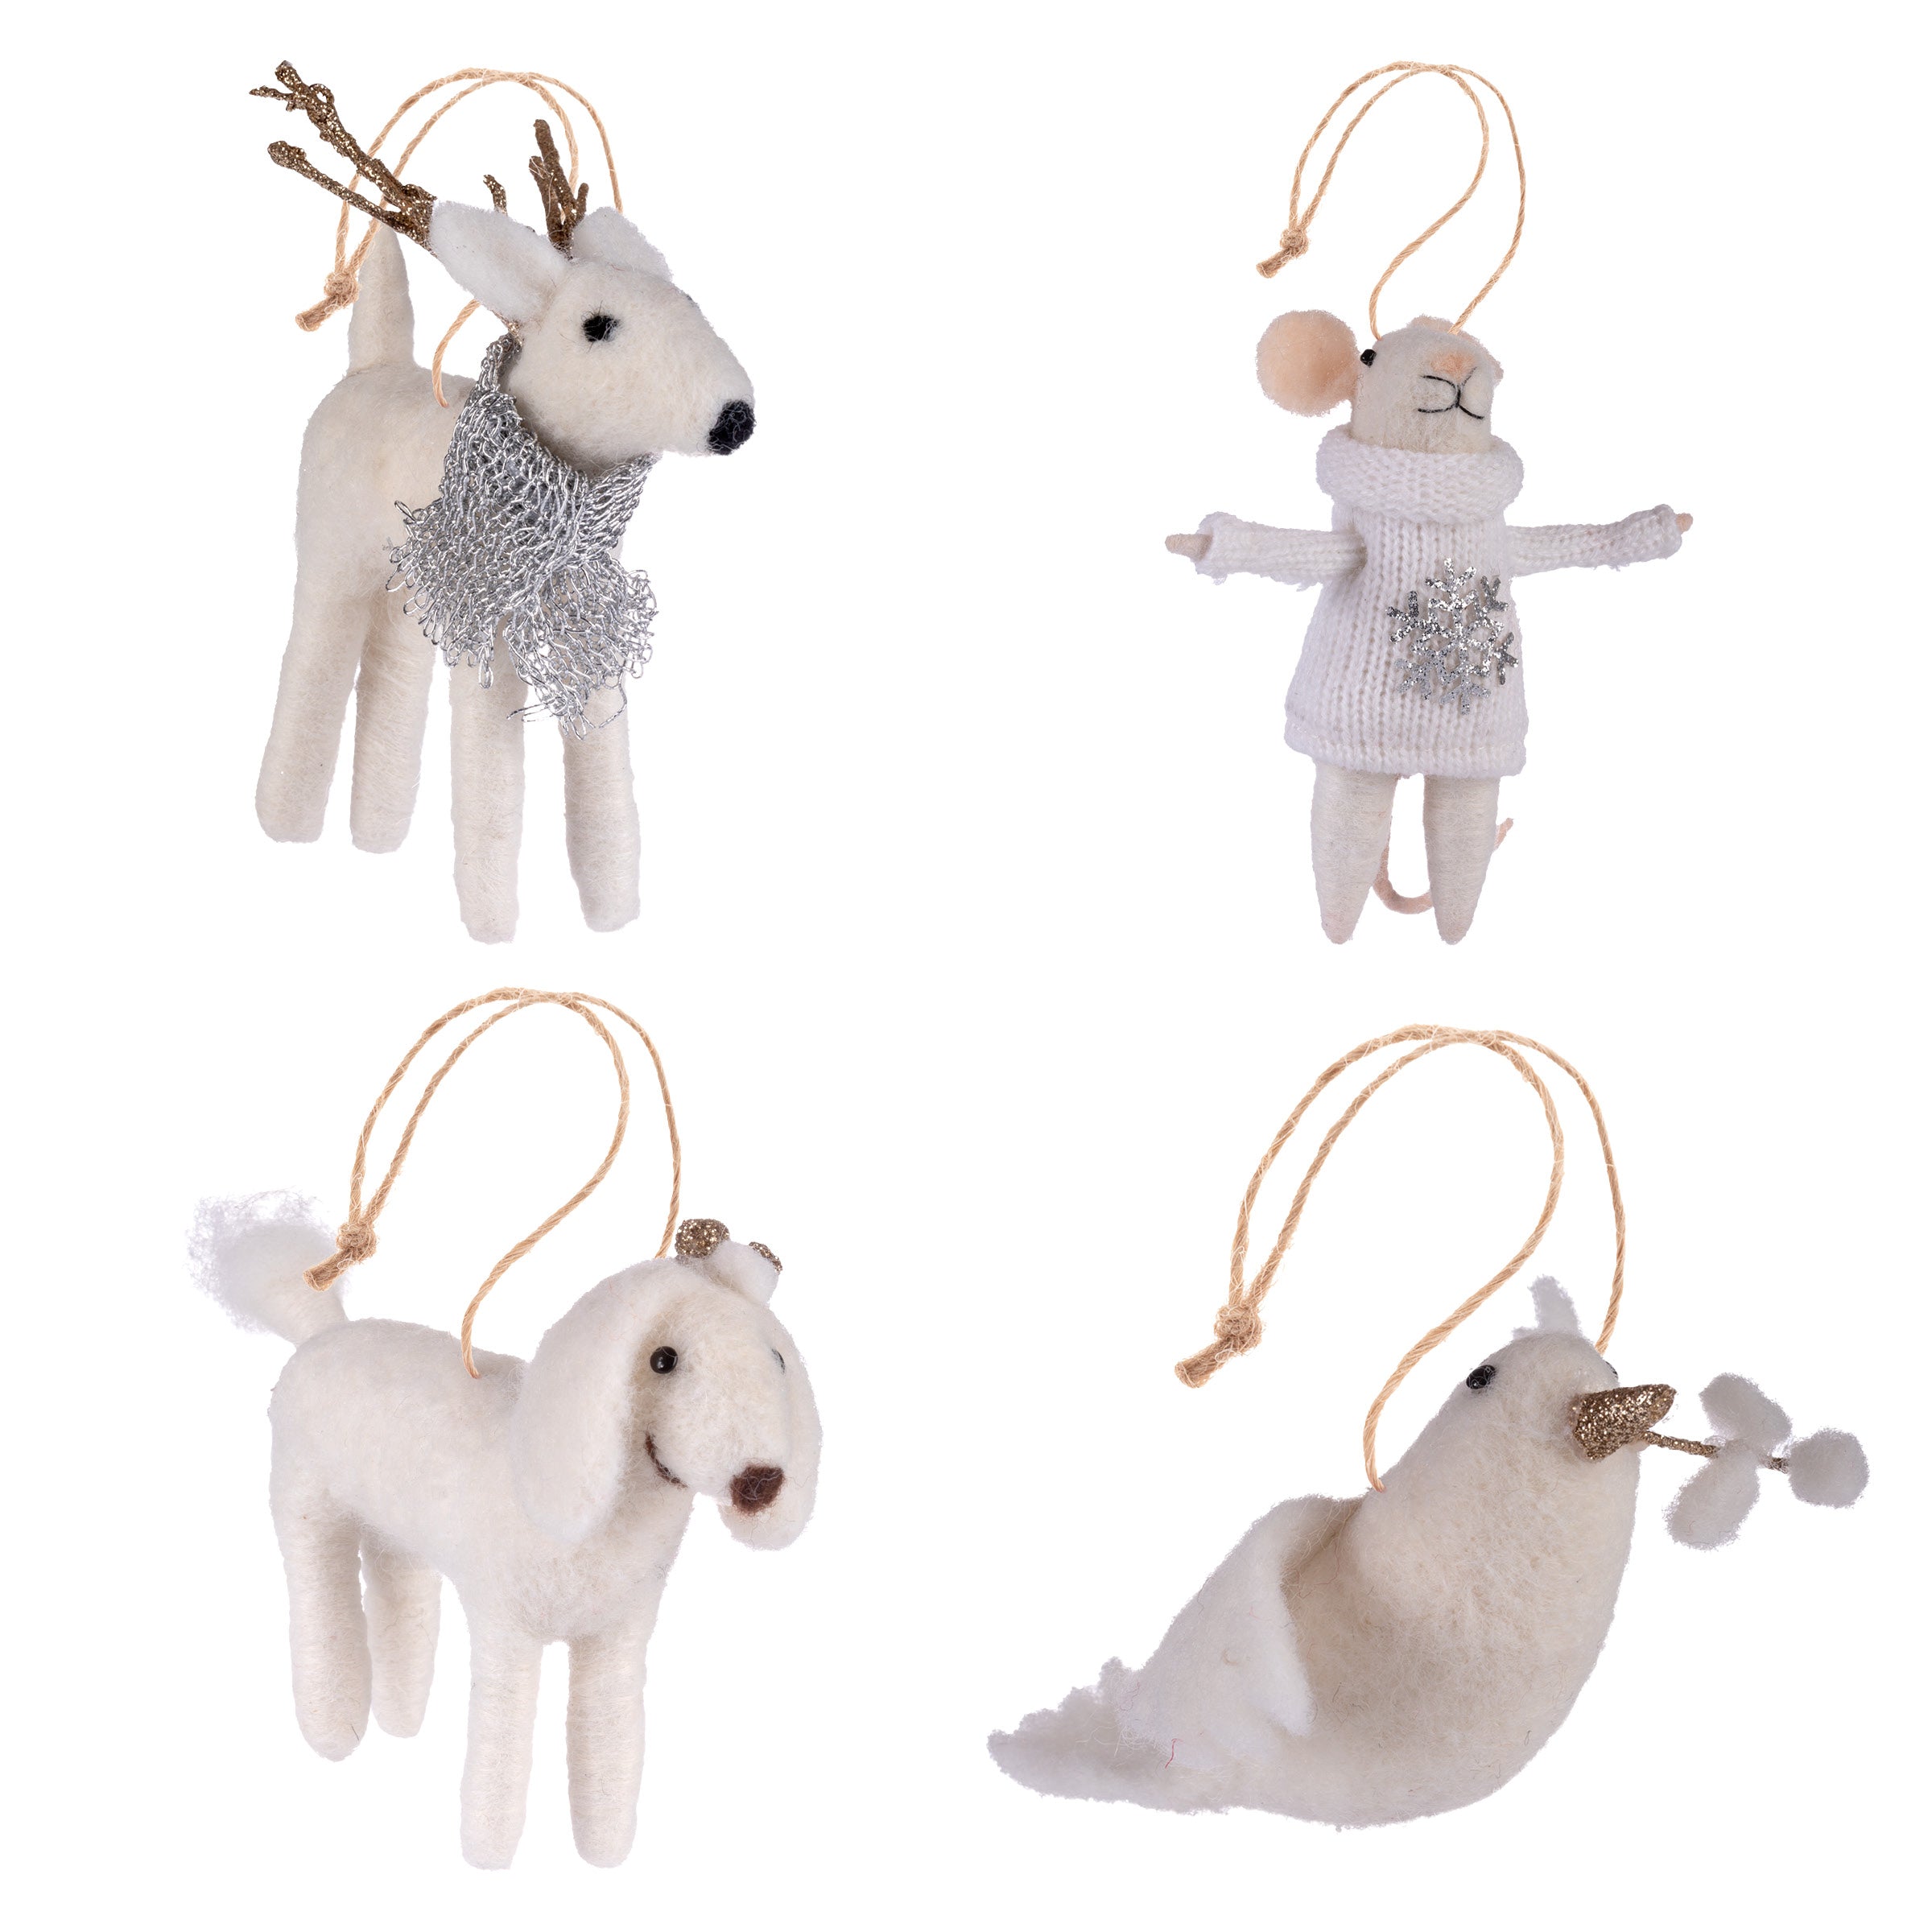 Handmade White Yeti Felt Ornaments, Set of 2 - Gifts With Humanity